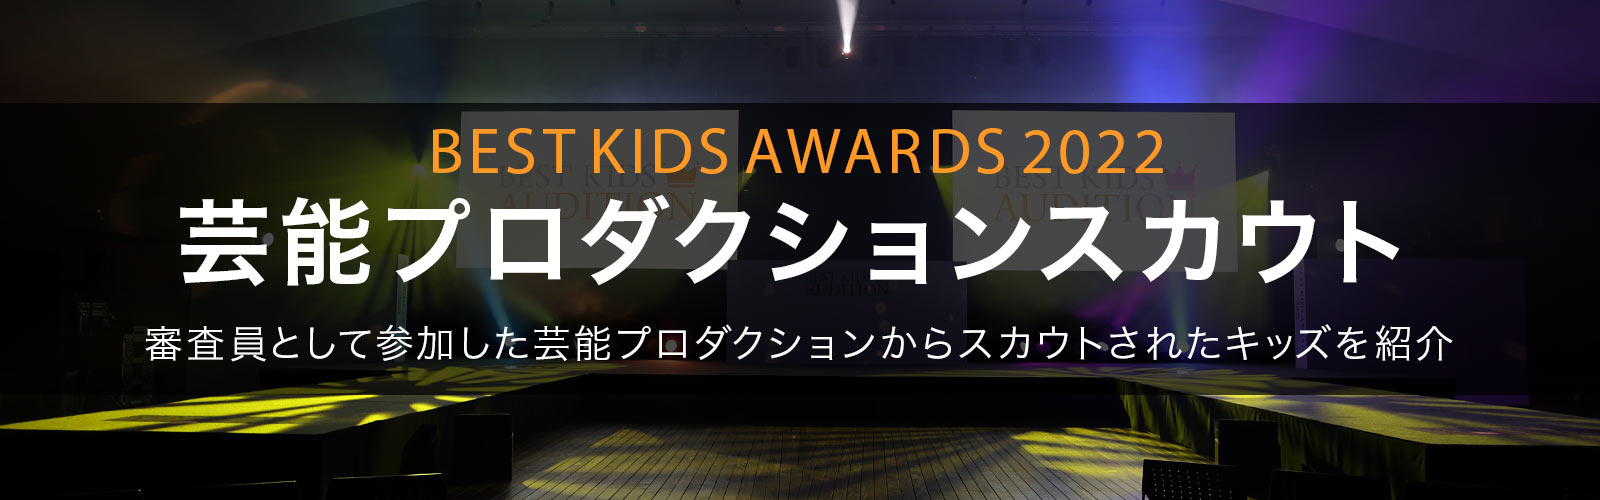 BEST KIDS AUDITION 2022芸能プロダクションスカウト